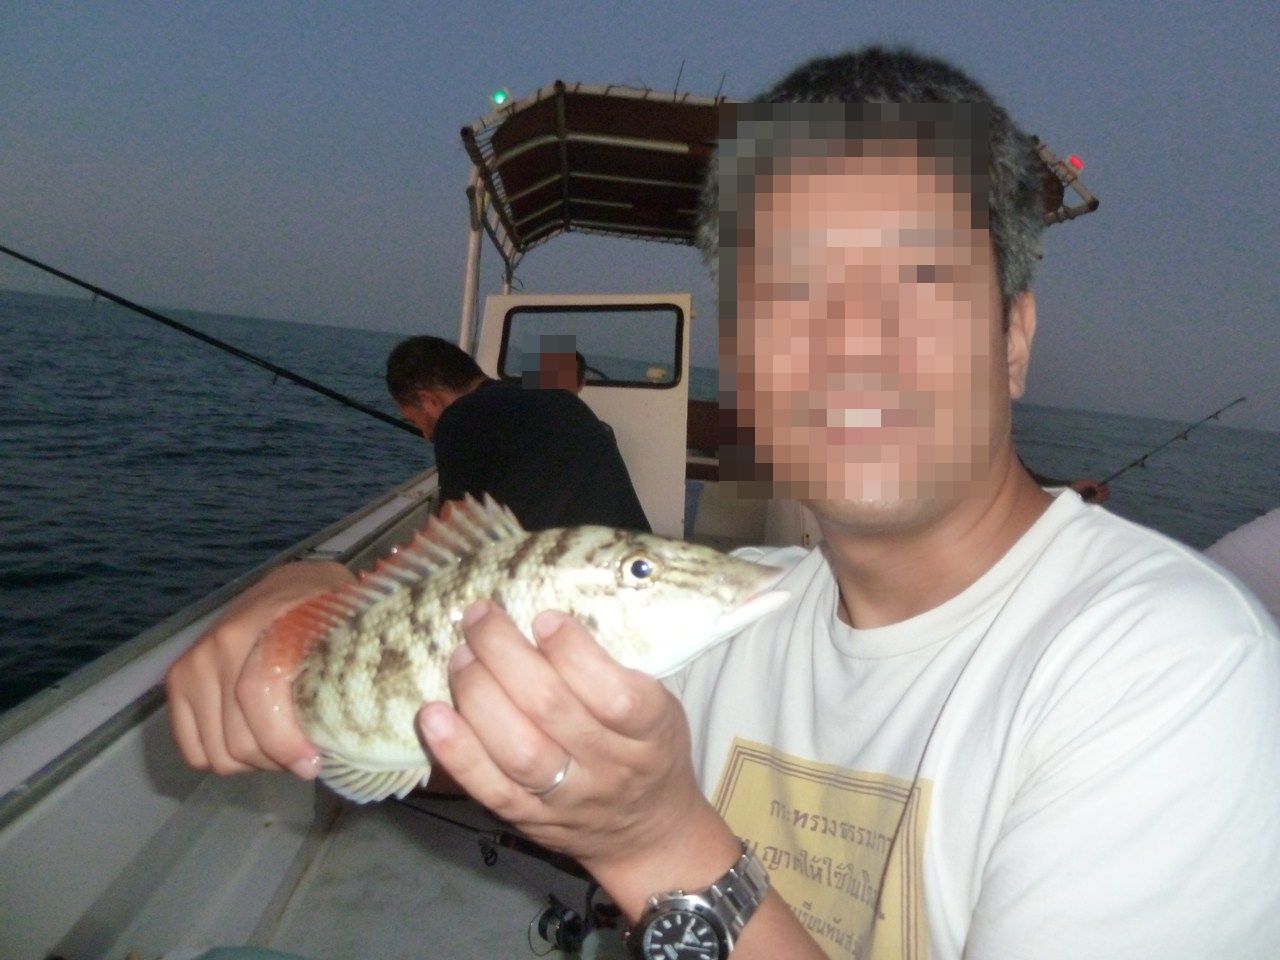 http://www.shintoko.jp/engblog/archives/images/2011/10/111028_qatarfishing933.jpg